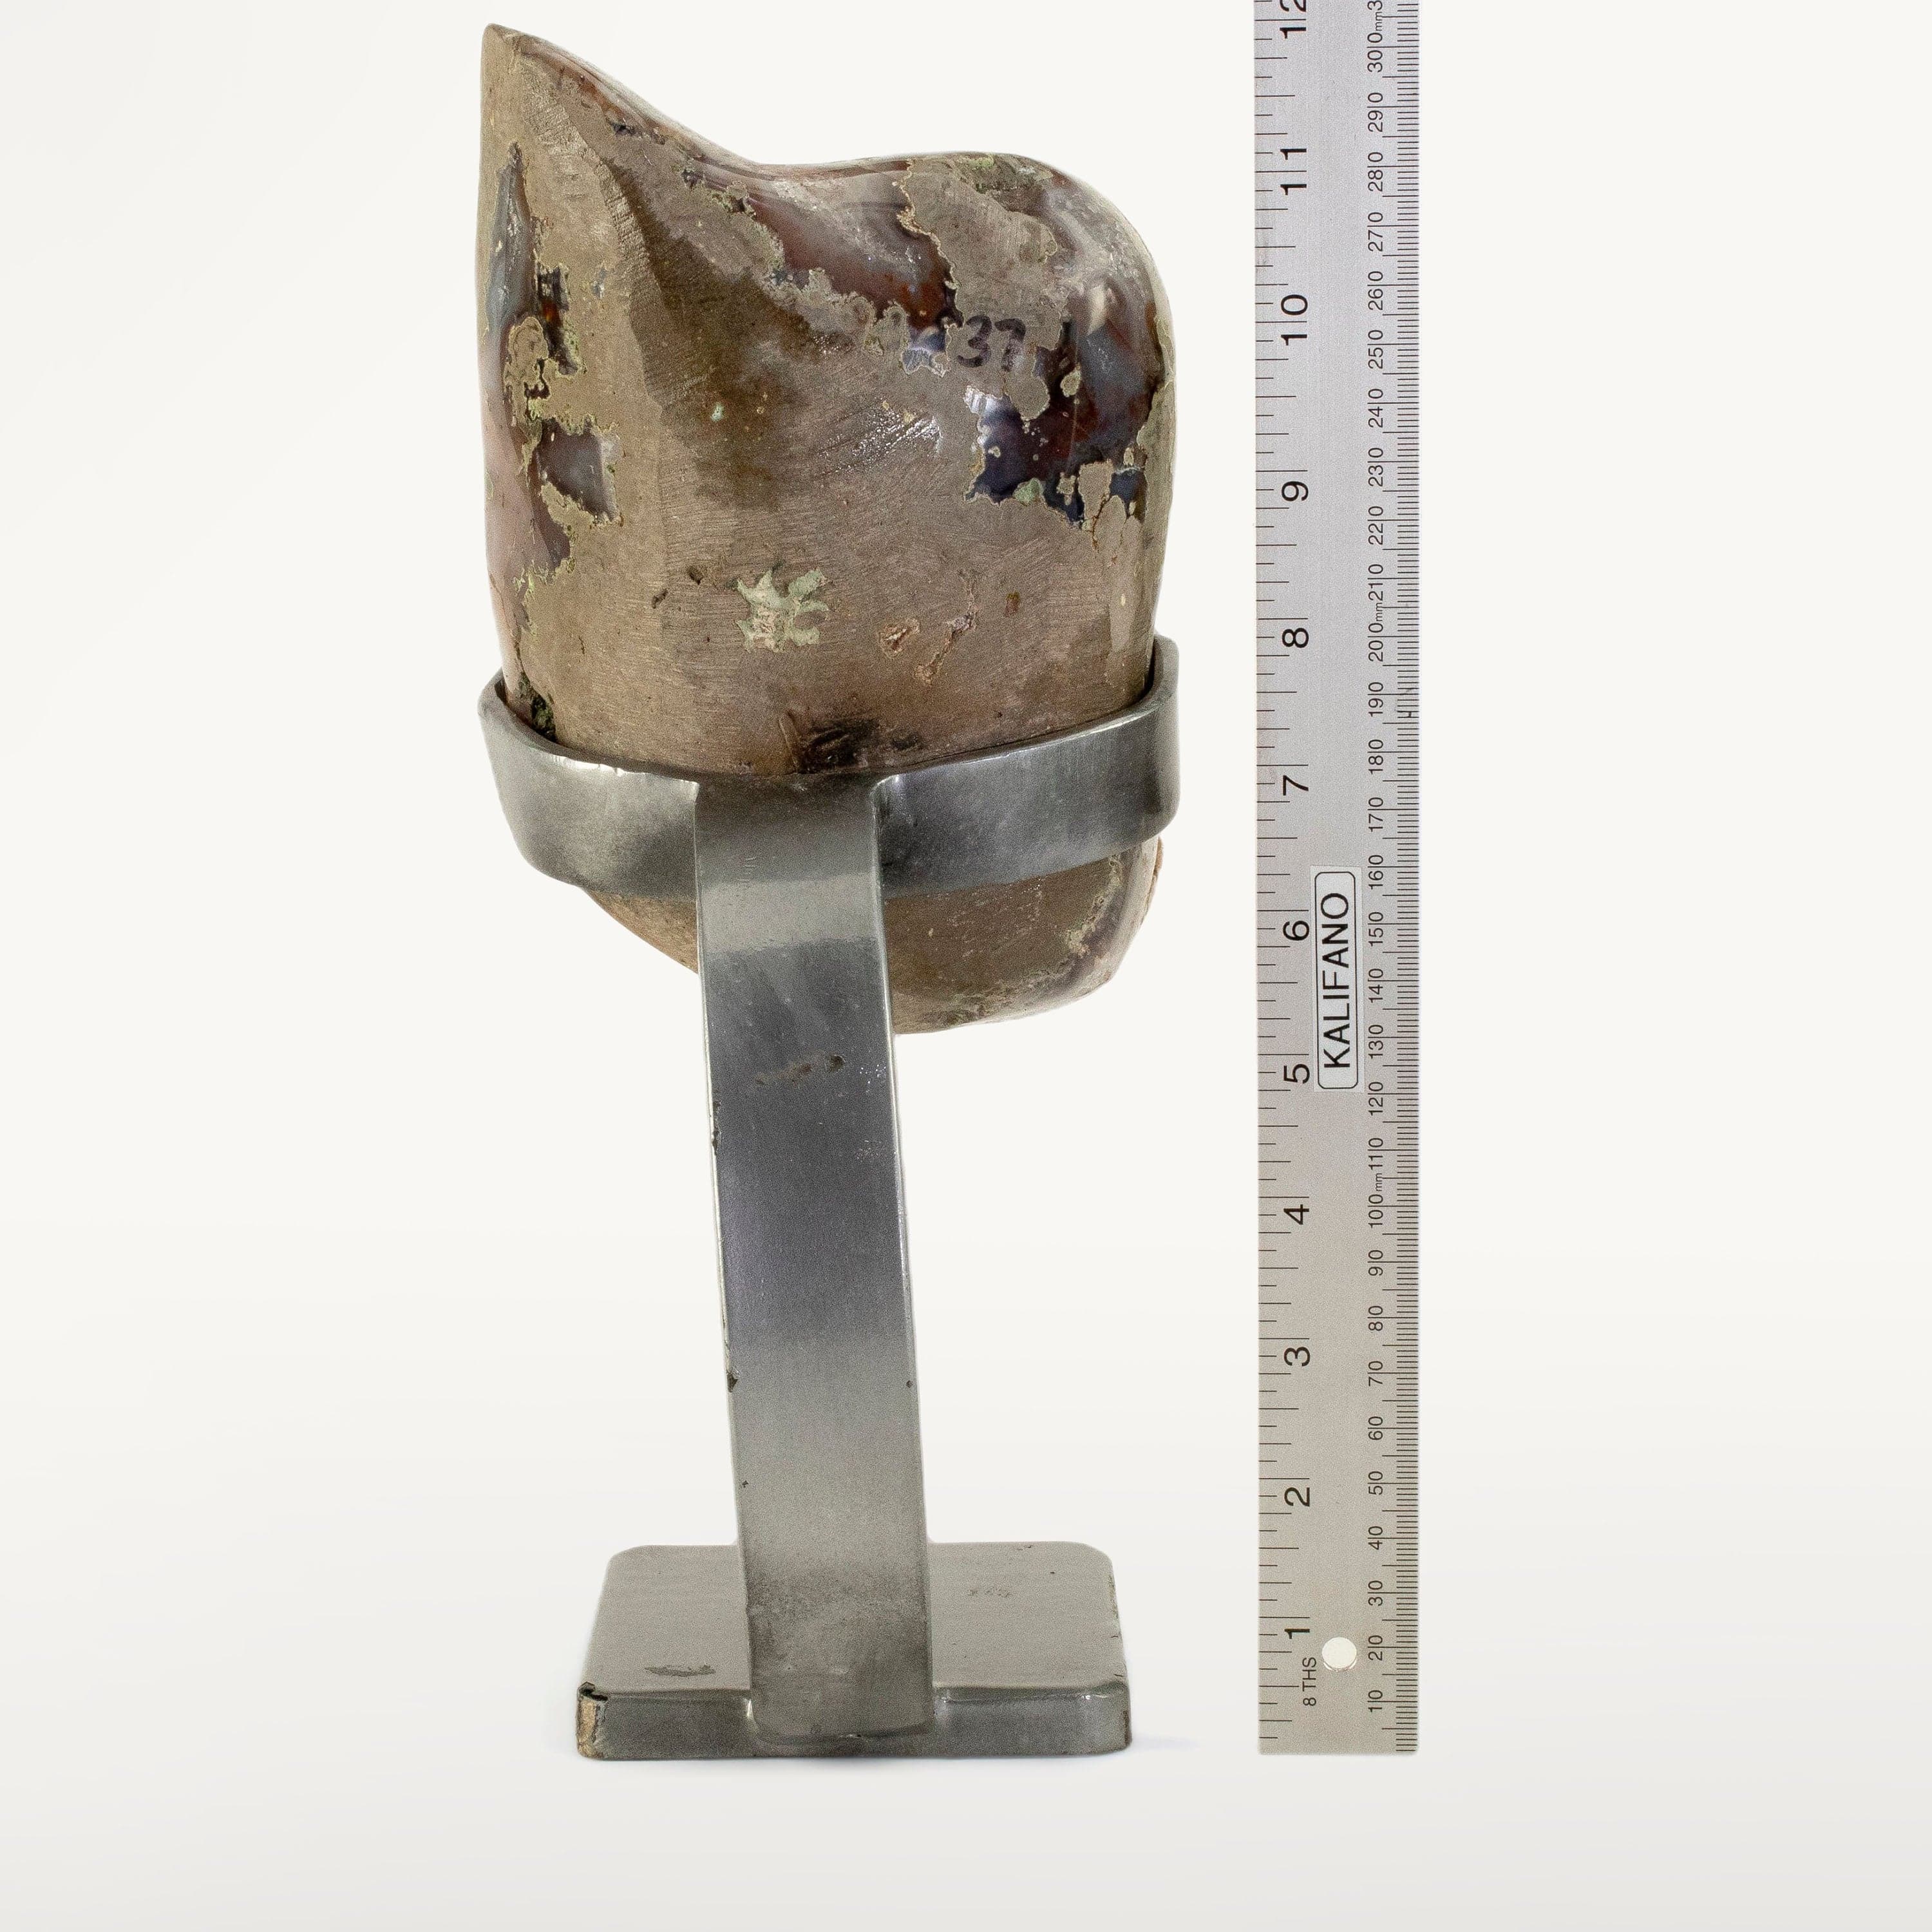 Kalifano Amethyst Uruguayan Druzy Amethyst Geode on Custom Stand - 9.8 lbs / 12 in. UAG2200.017